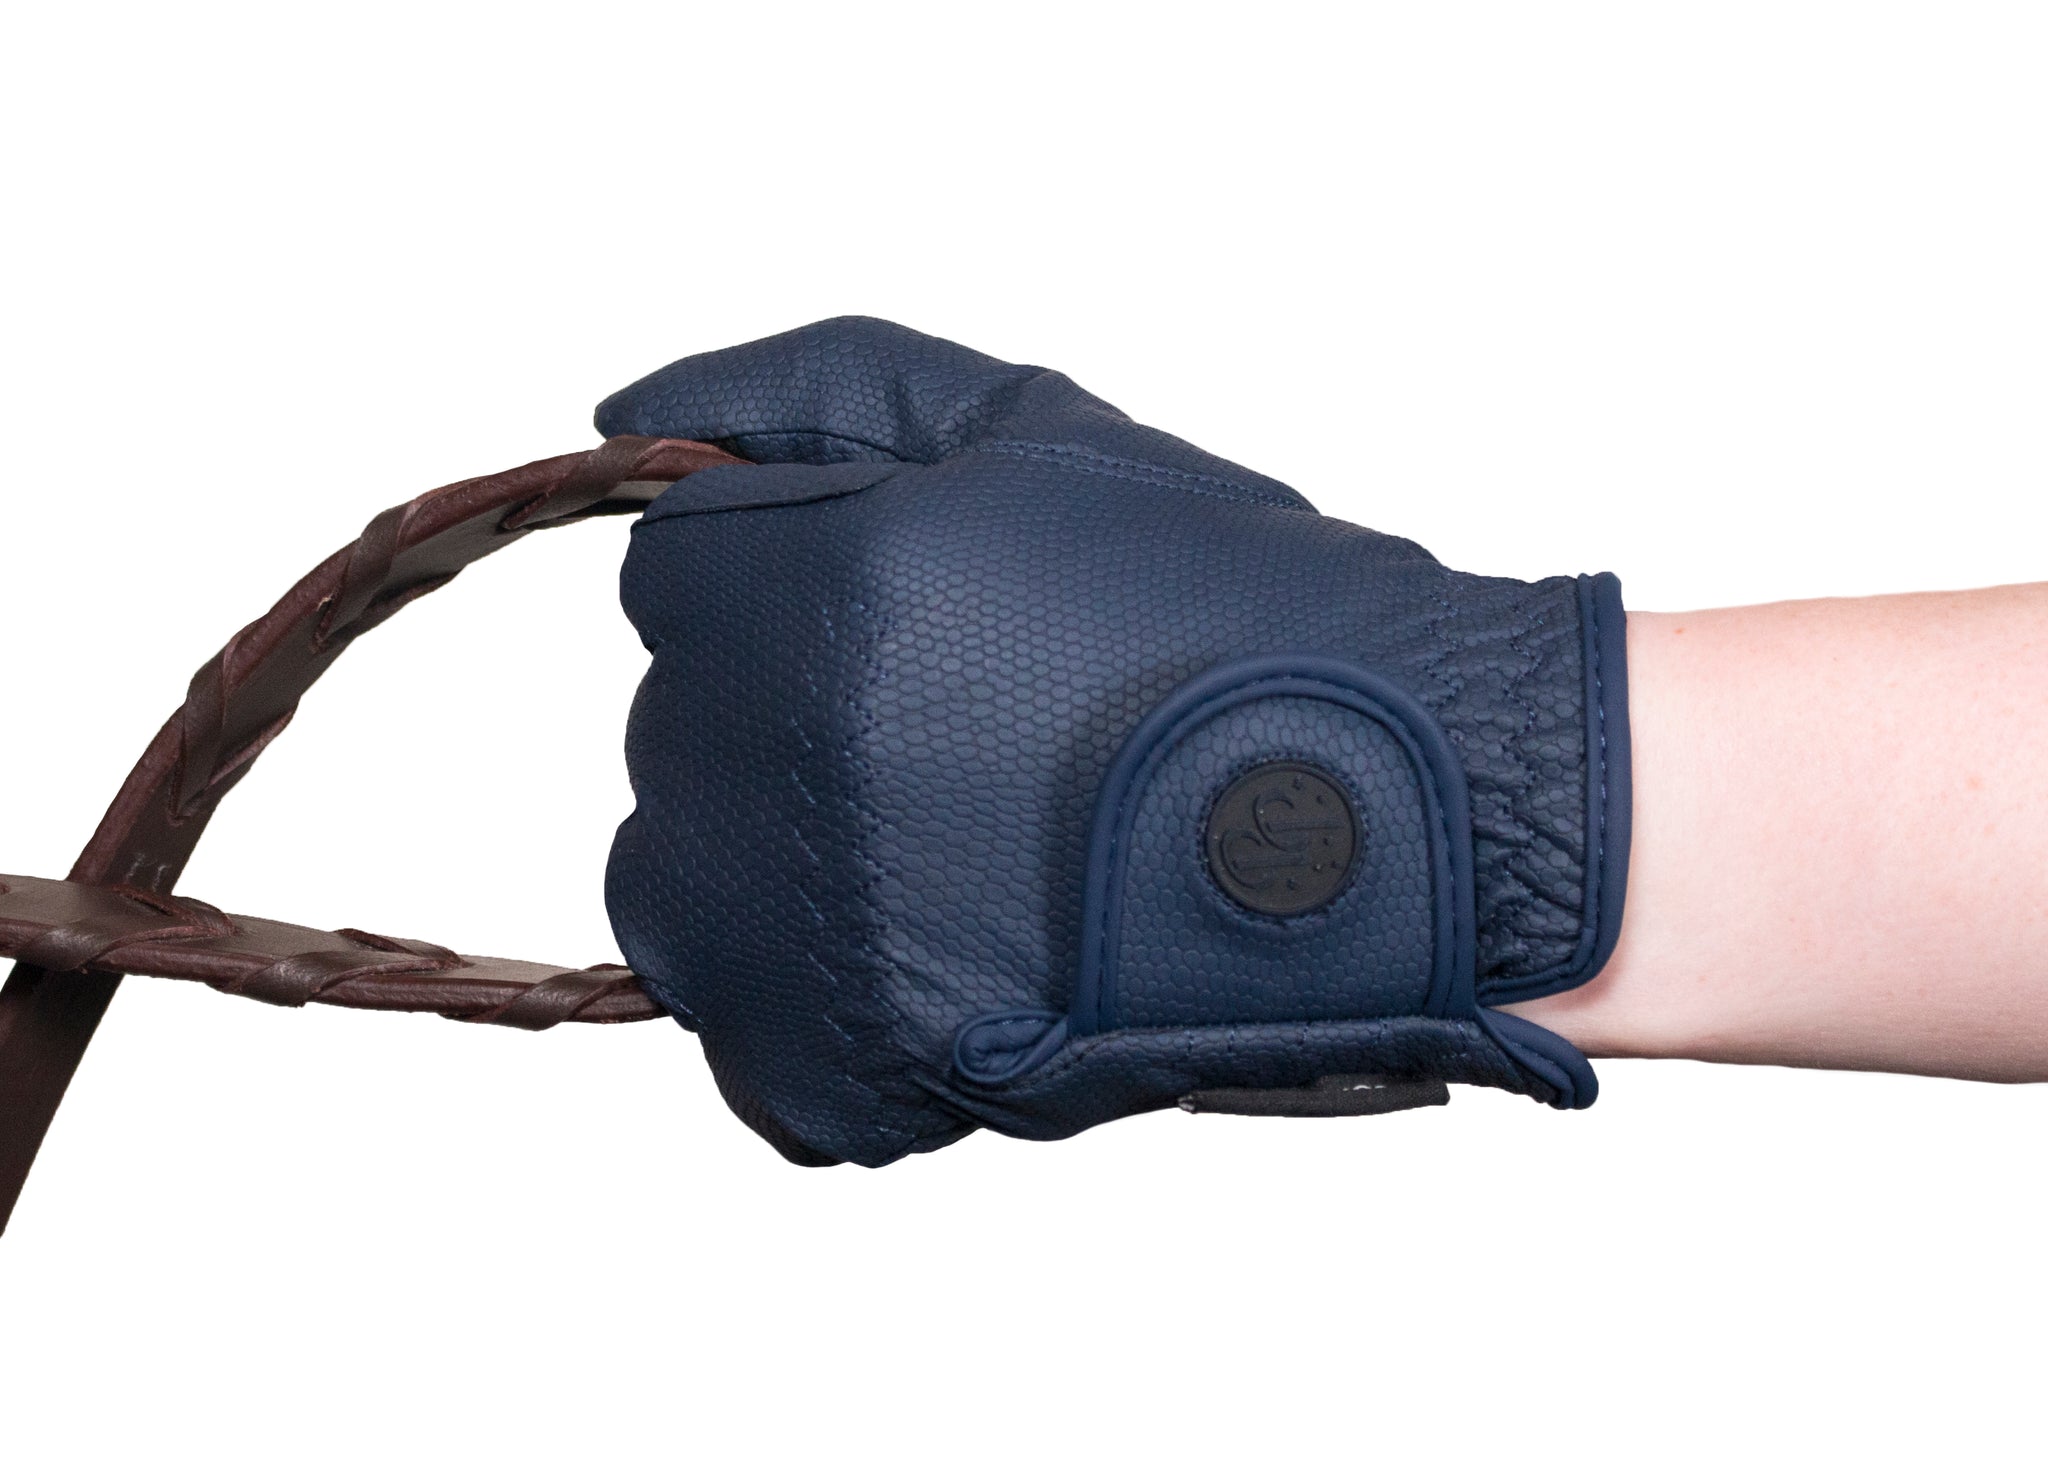 Navy Winter Touchscreen Friendly Gloves